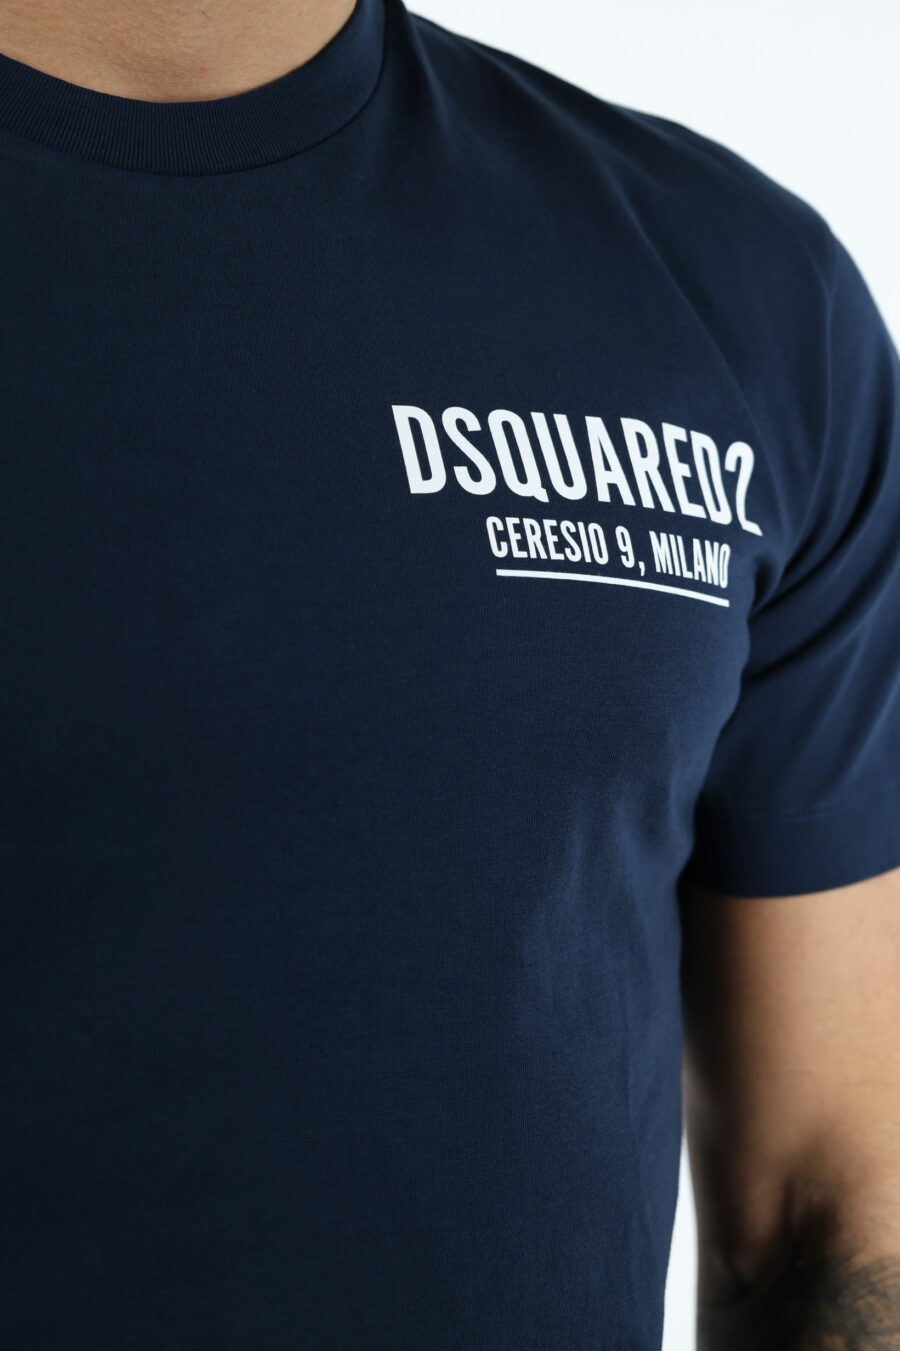 T-shirt azul escura com minilogo "ceresio 9, milano" - 107100